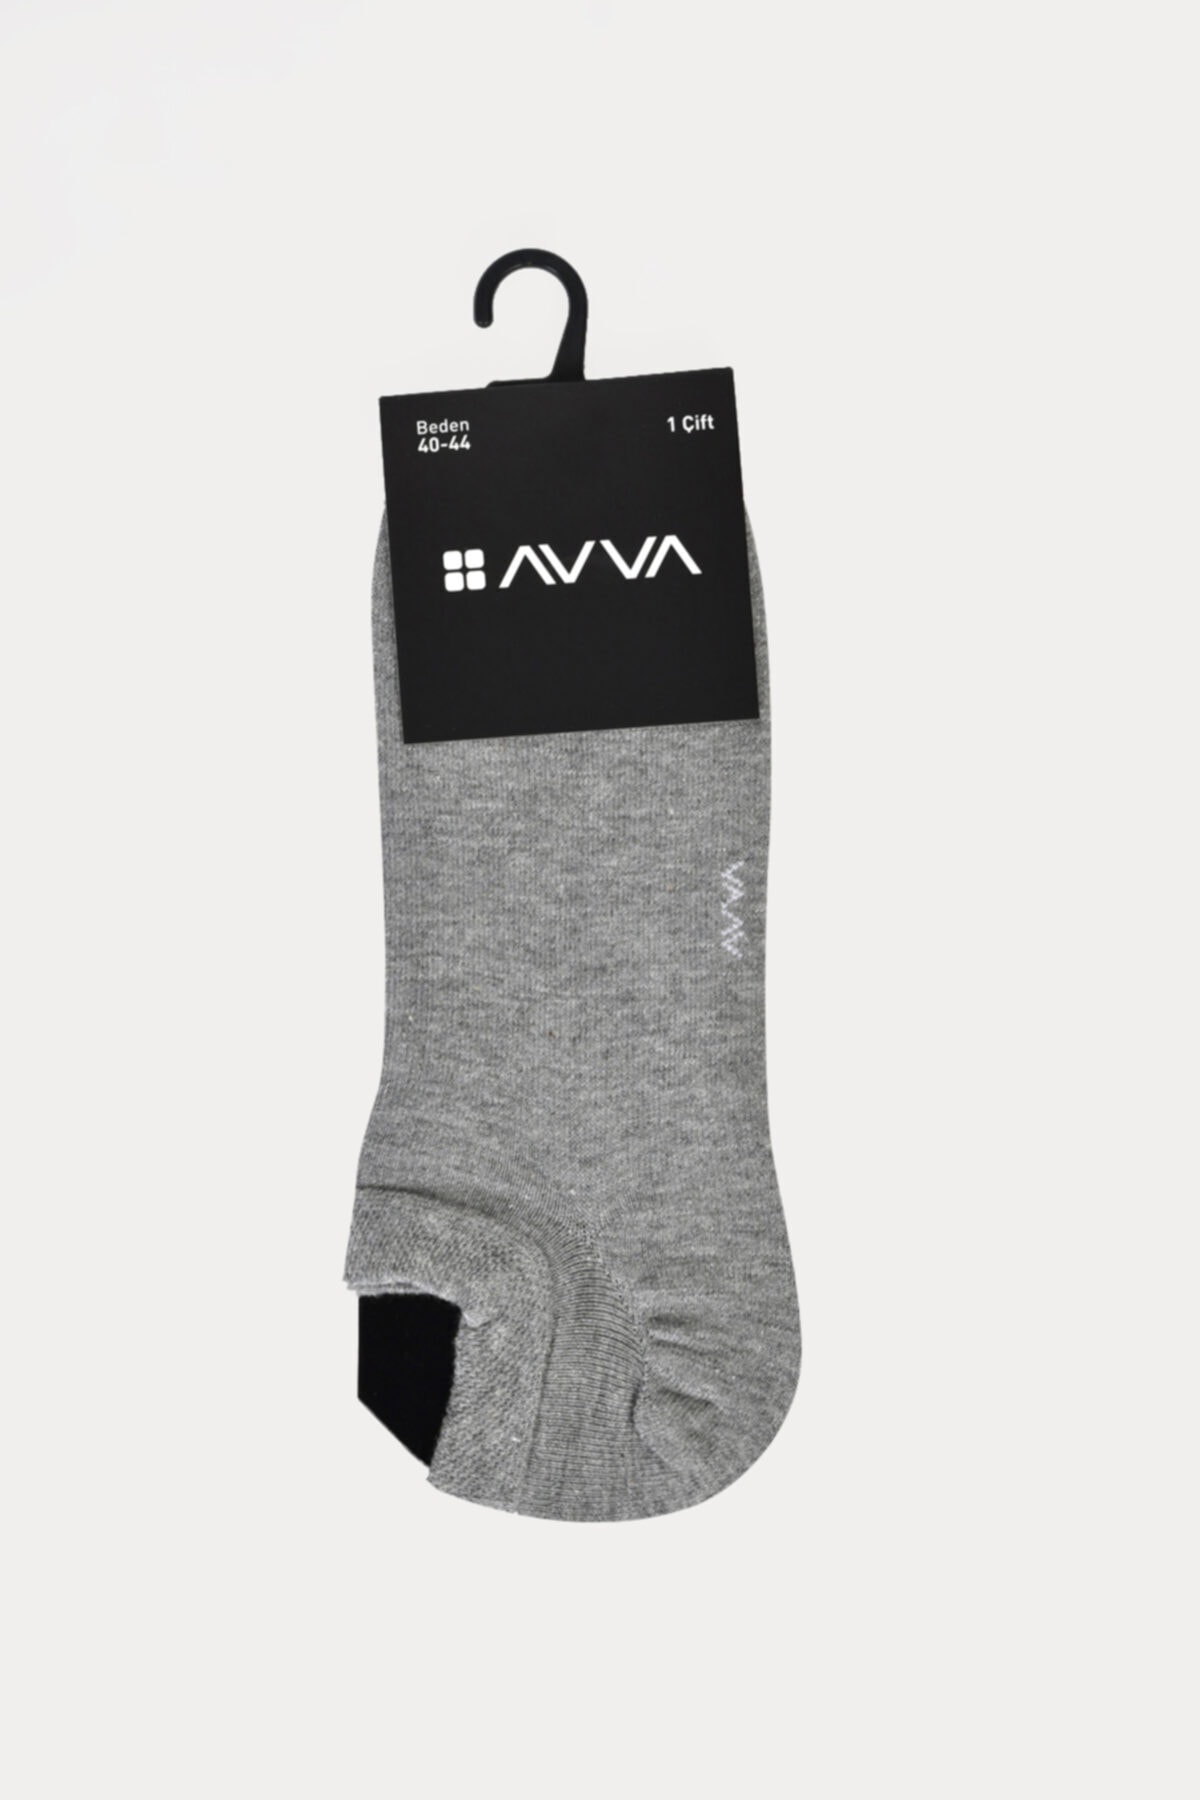 Avva Men's Gray Crewneck Socks